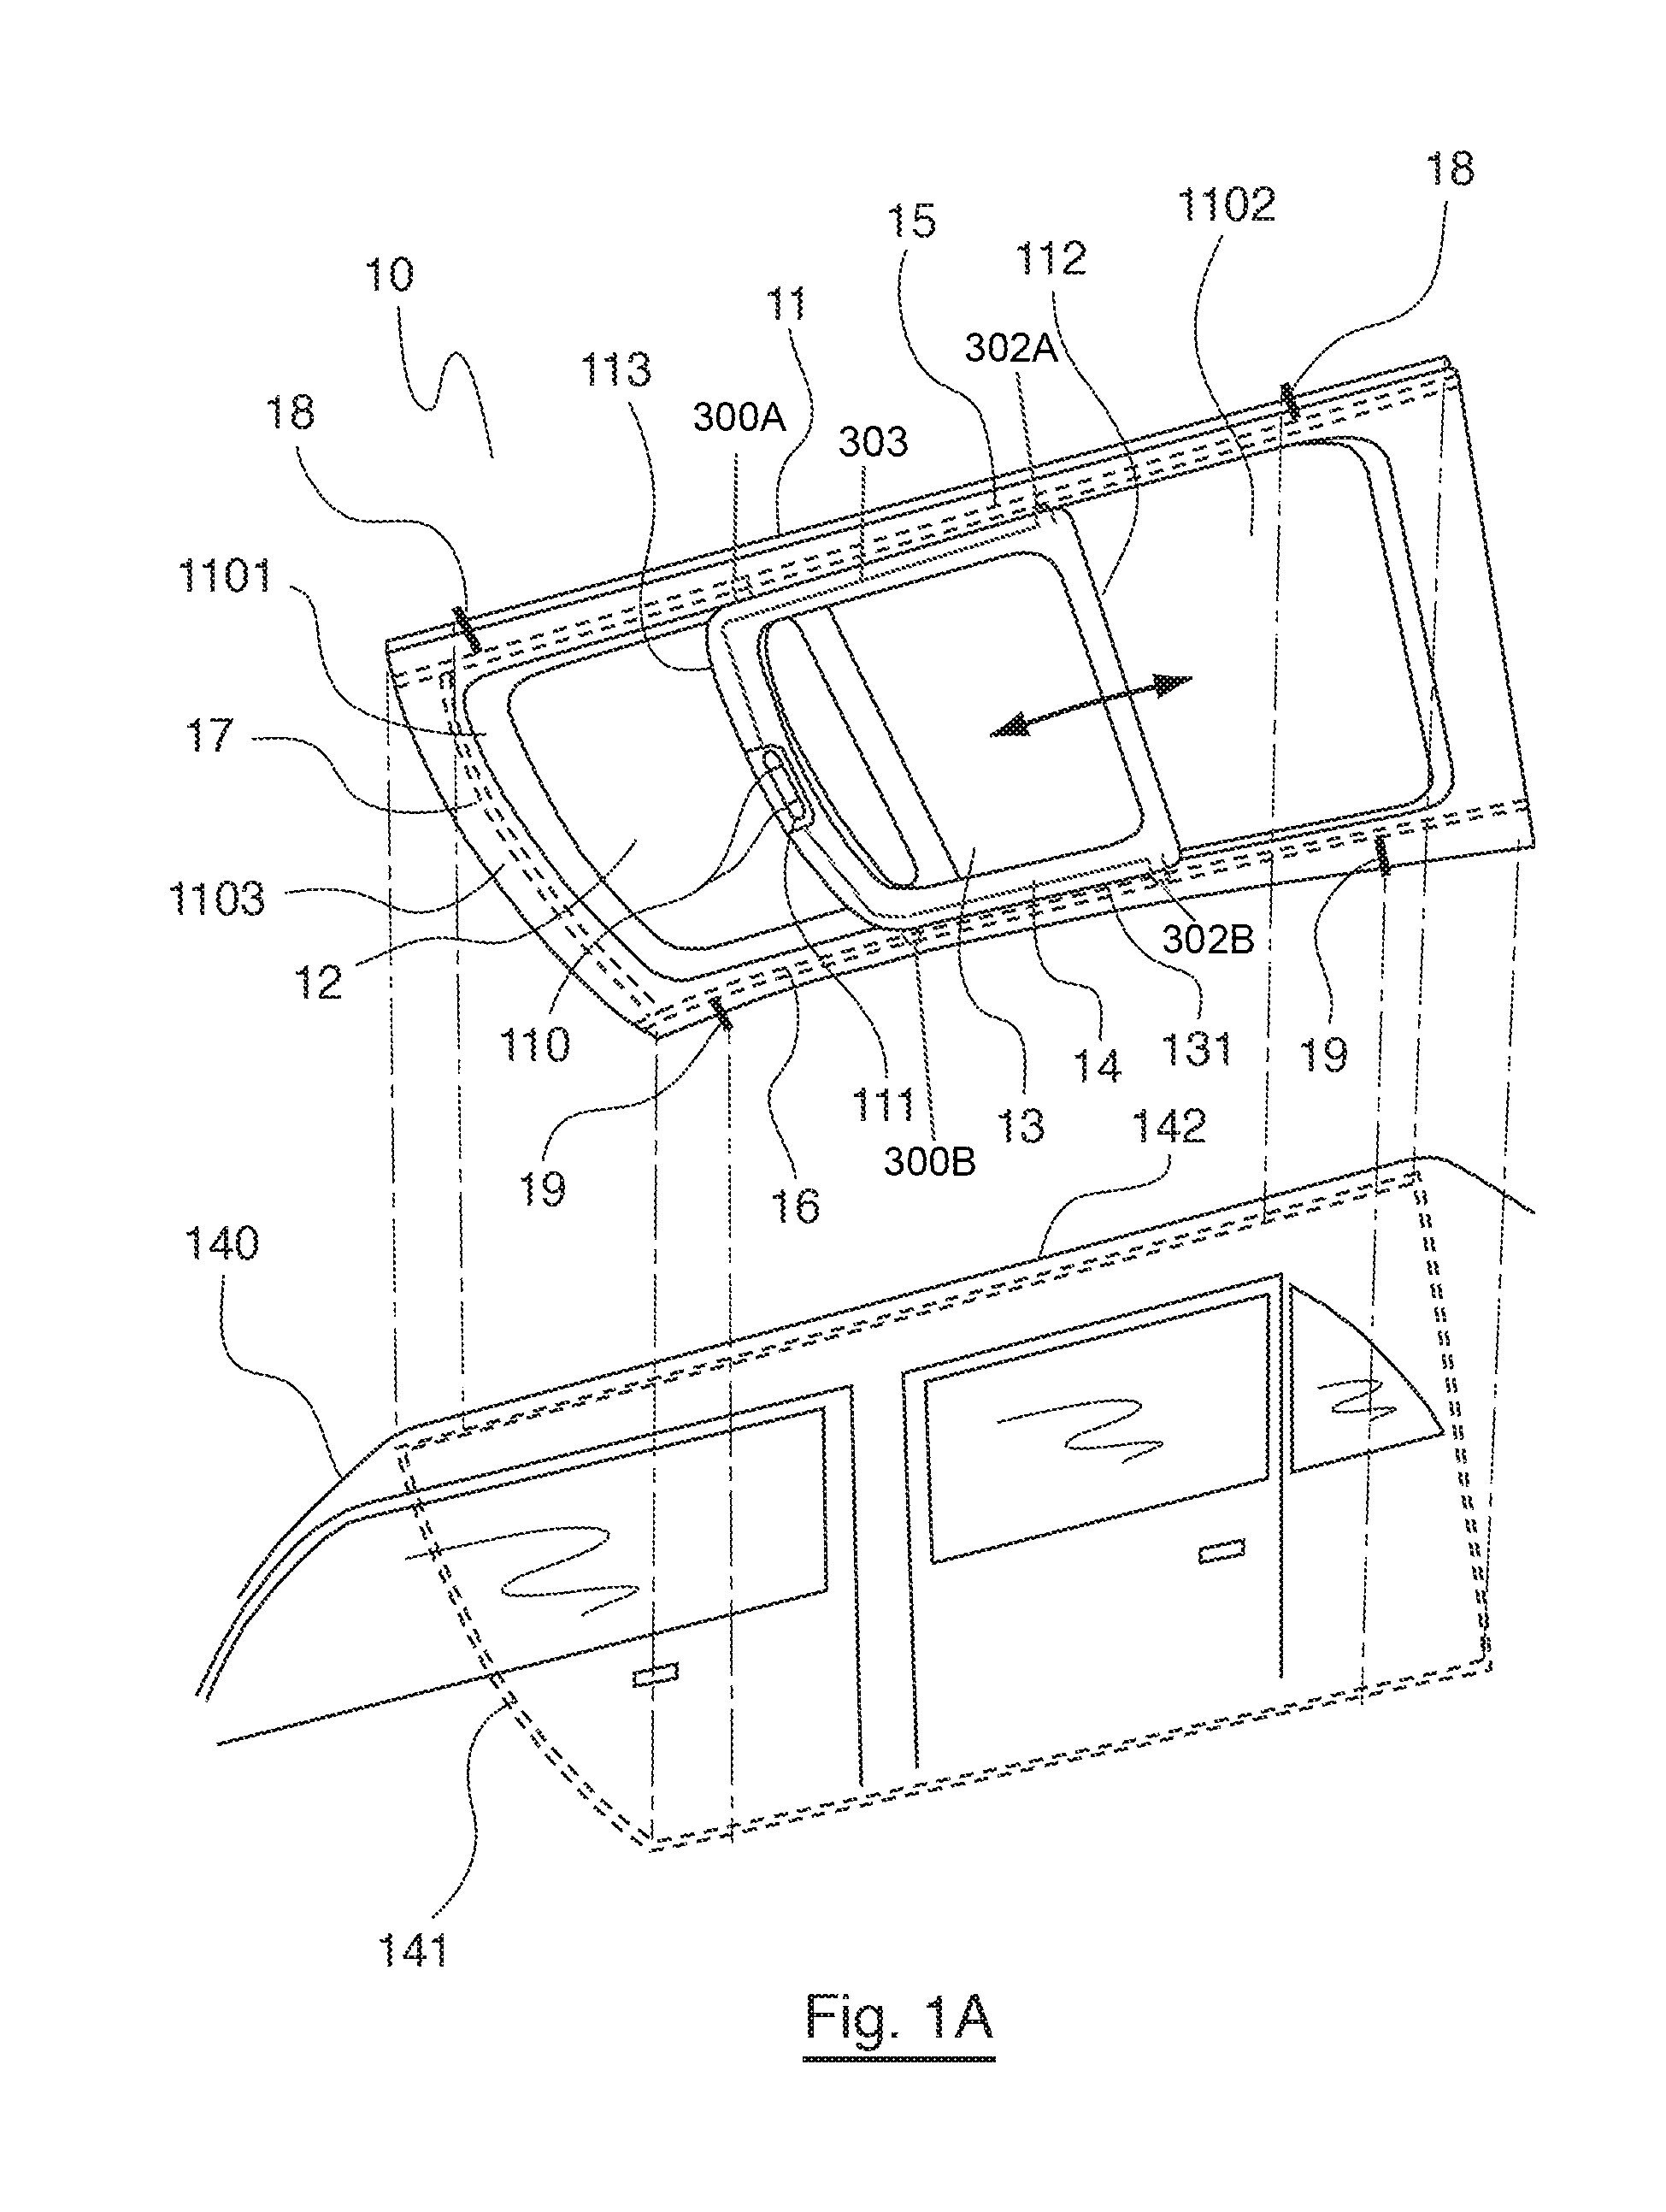 Glazed roof of a motor vehicle, corresponding method of assembly and corresponding vehicle